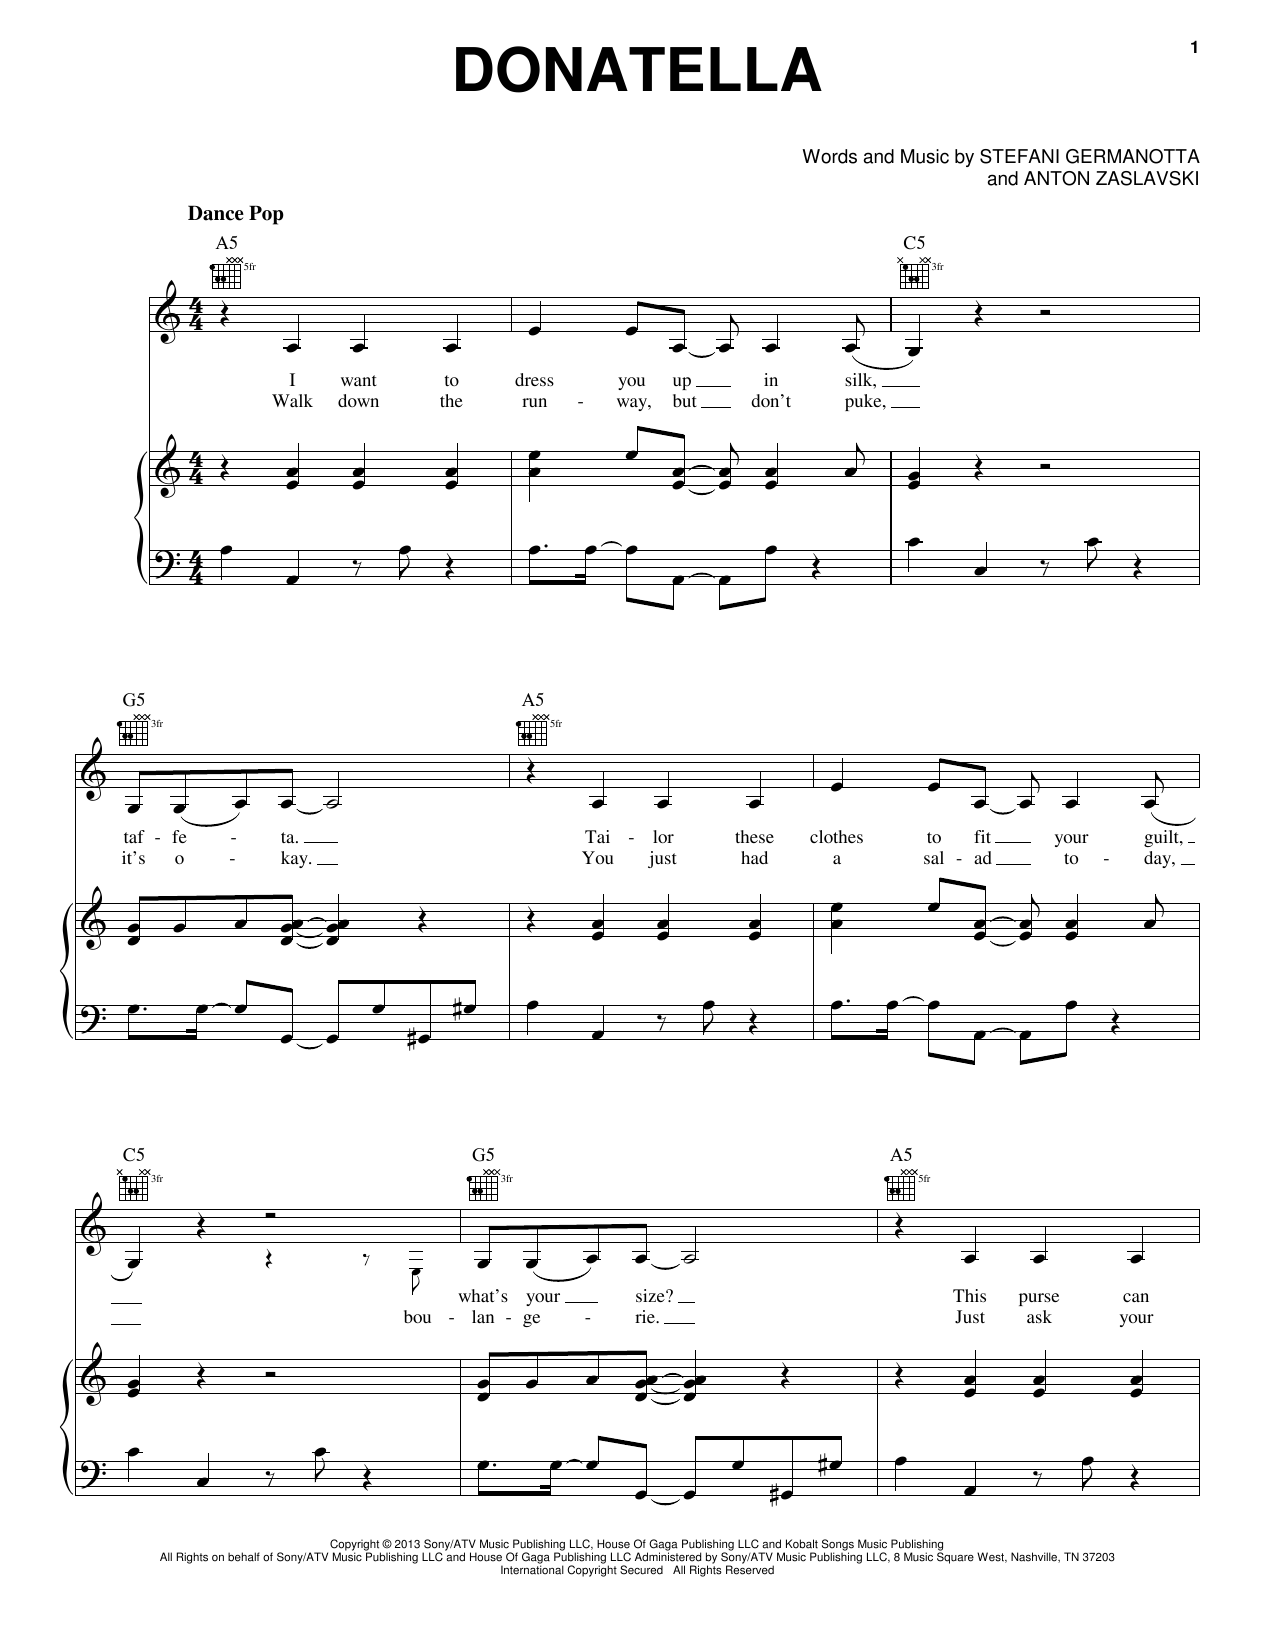 Lady Gaga Donatella Sheet Music Notes & Chords for Easy Piano - Download or Print PDF